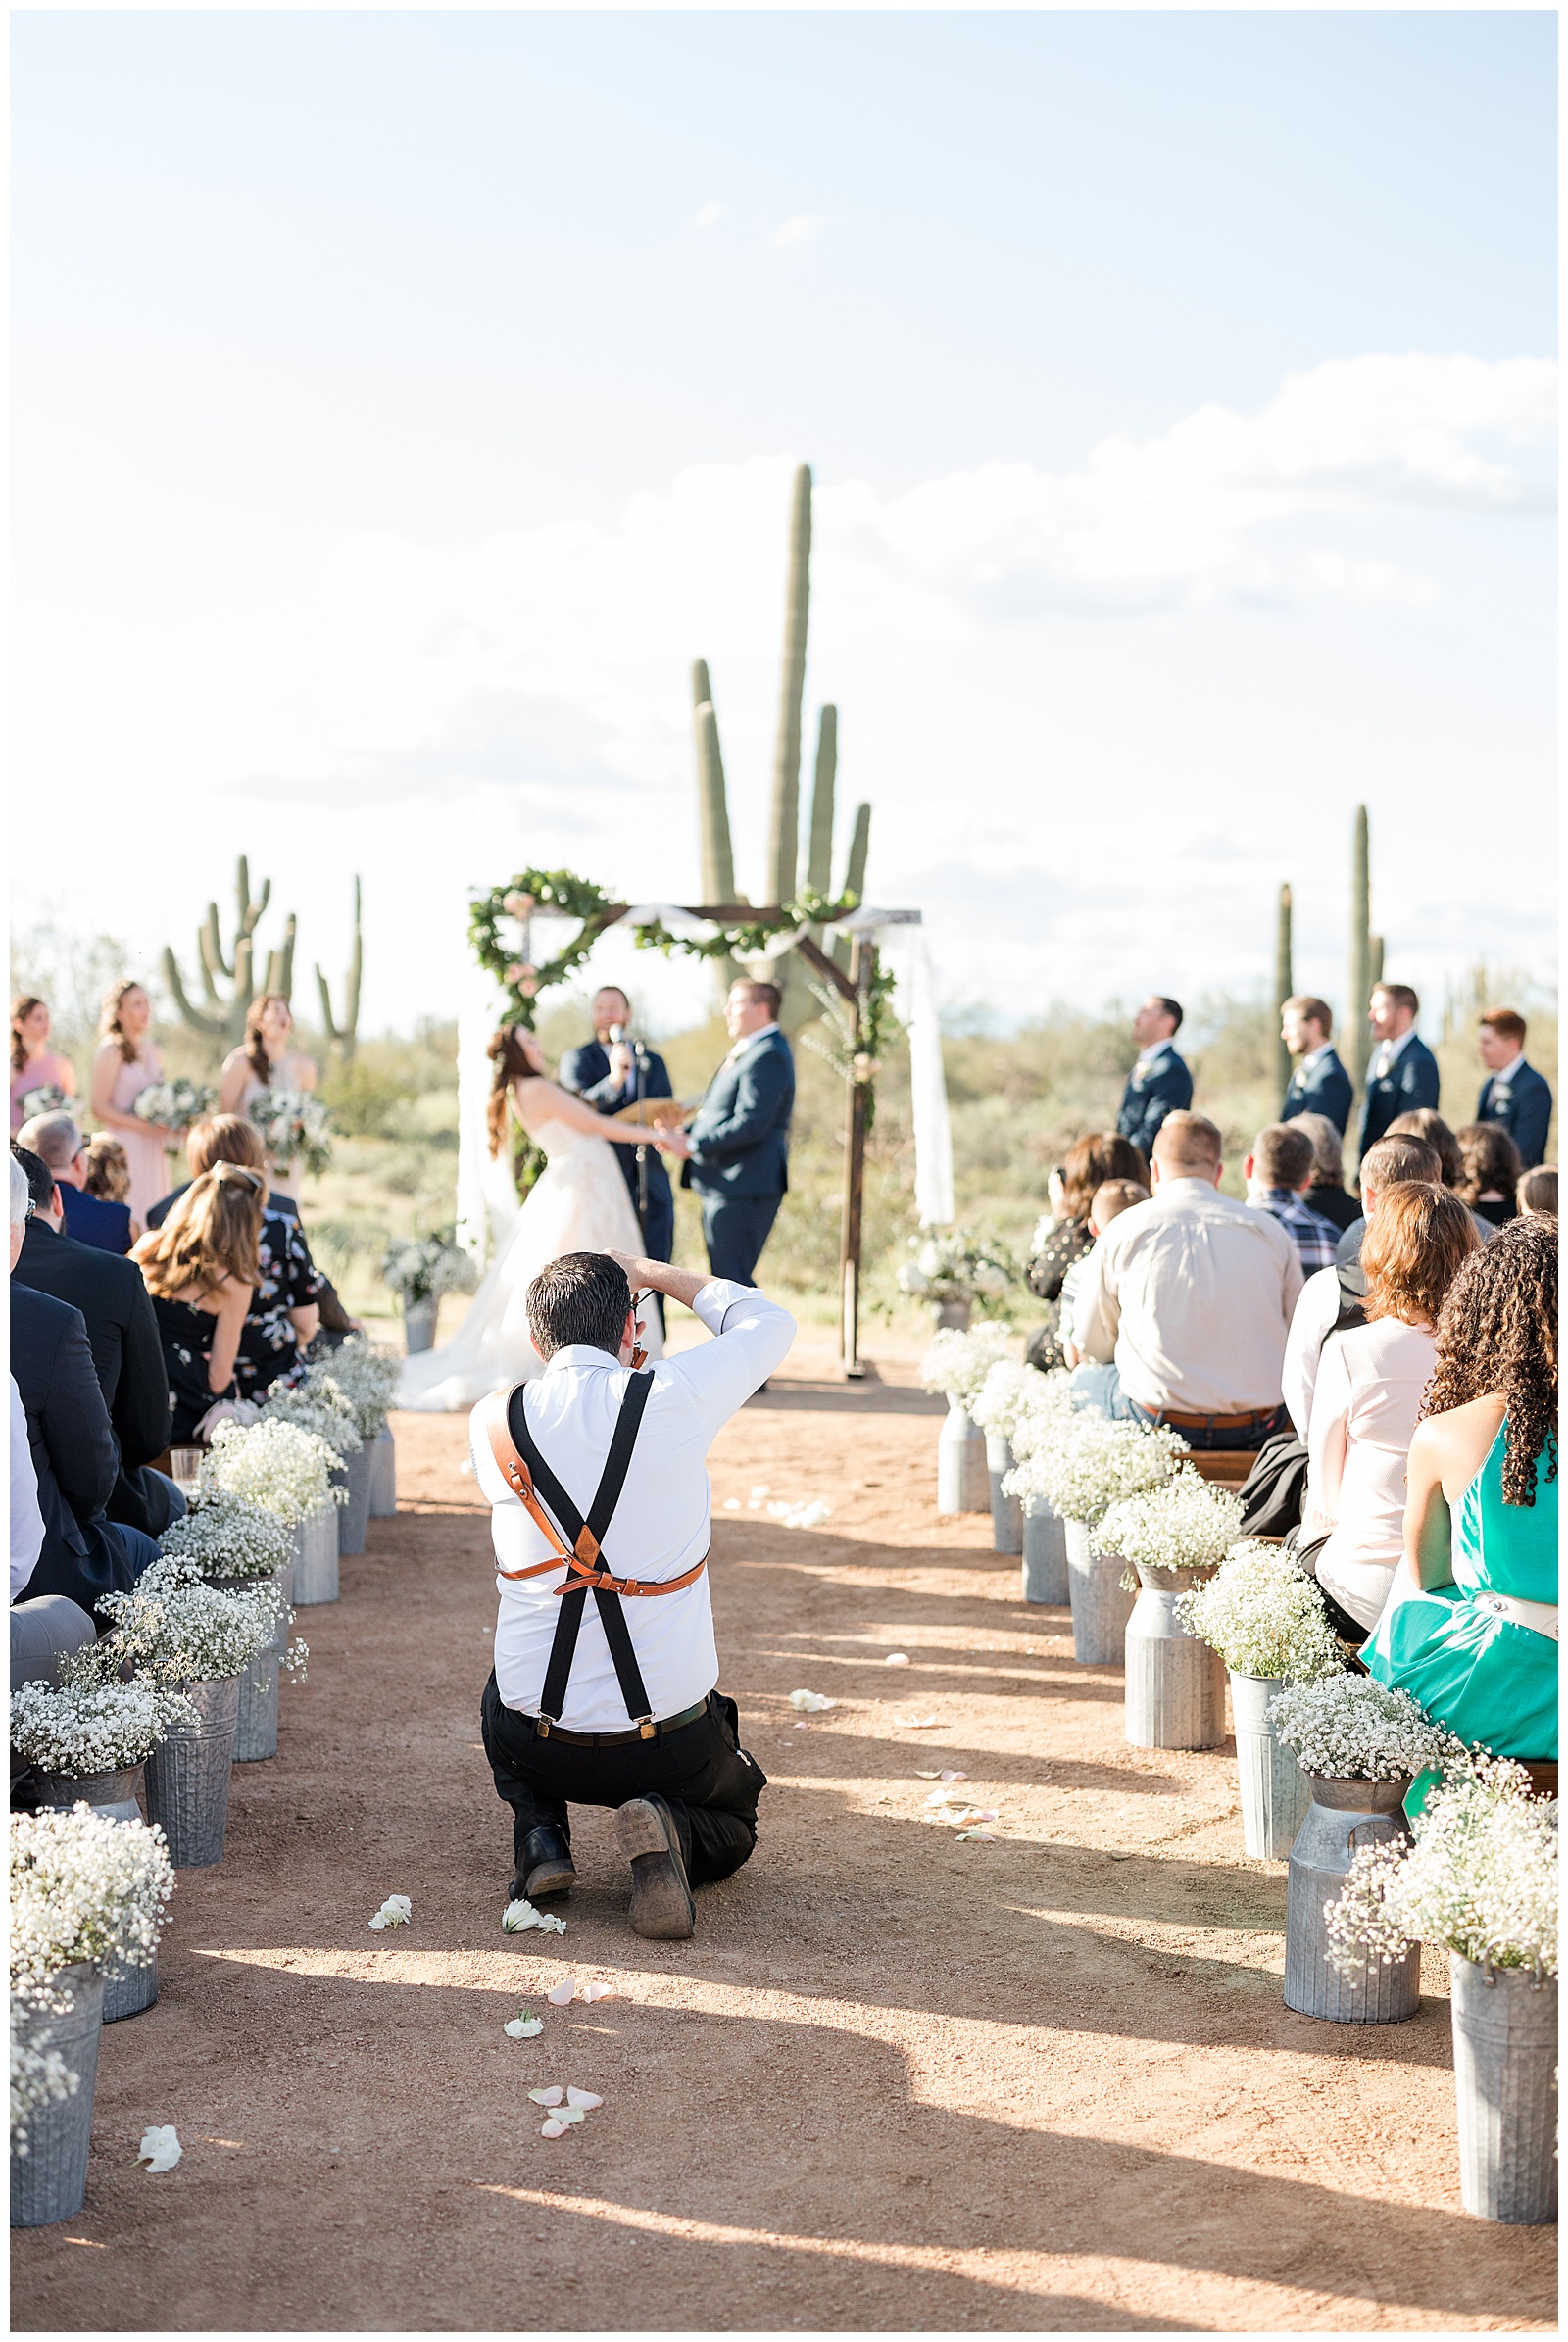 Wedding photographer in Phoenix, Stephen & Melissa